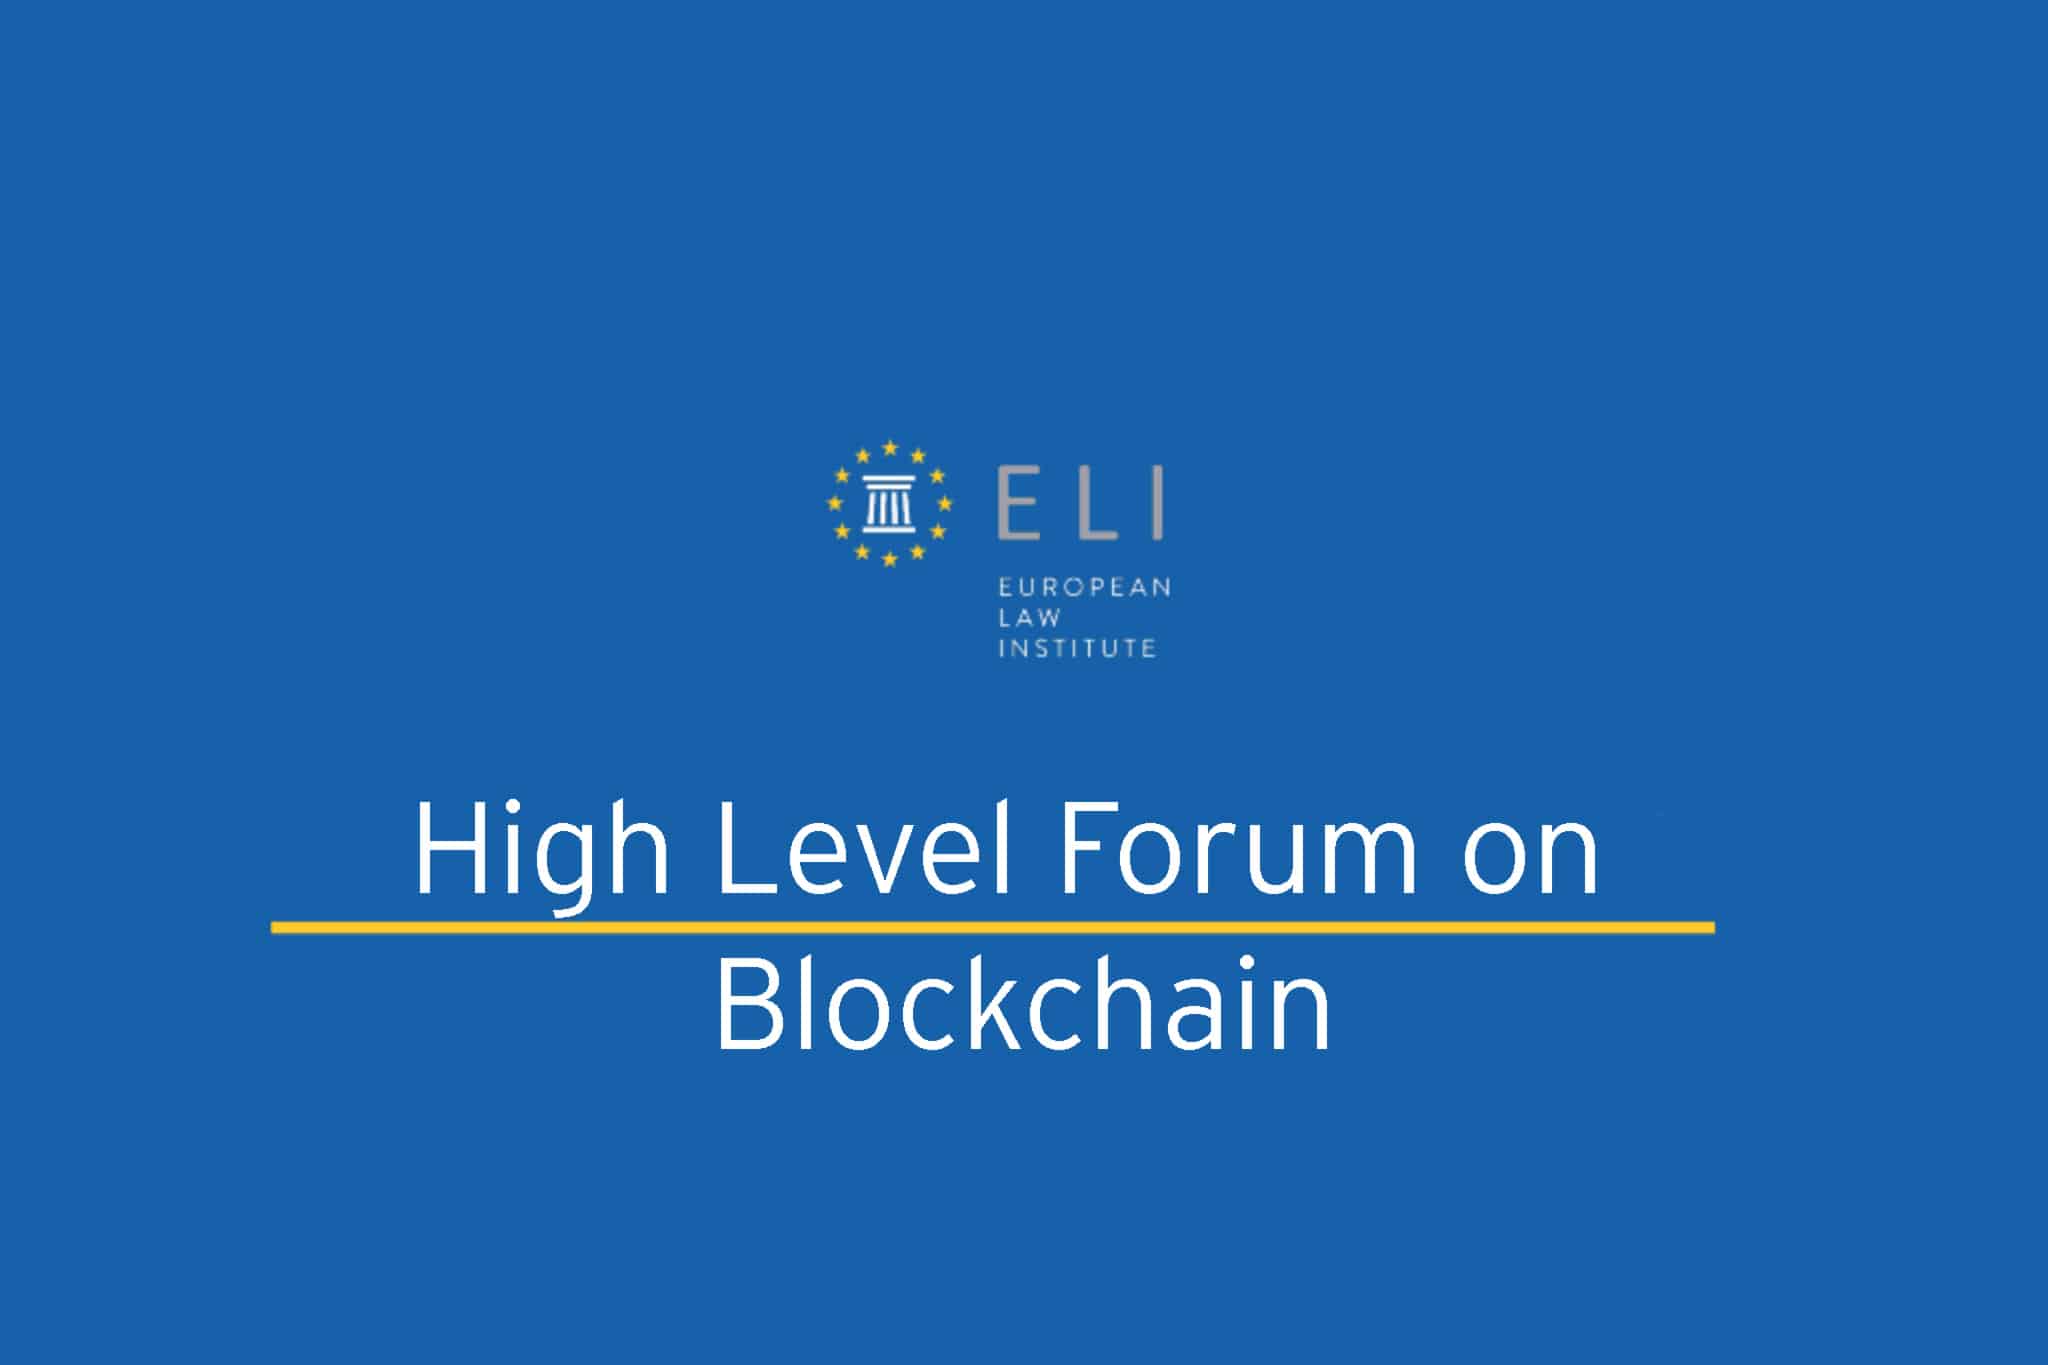 European Commission European law Institute - Principleas on Blockchain Technology event austria lawyer Martin Hanzl